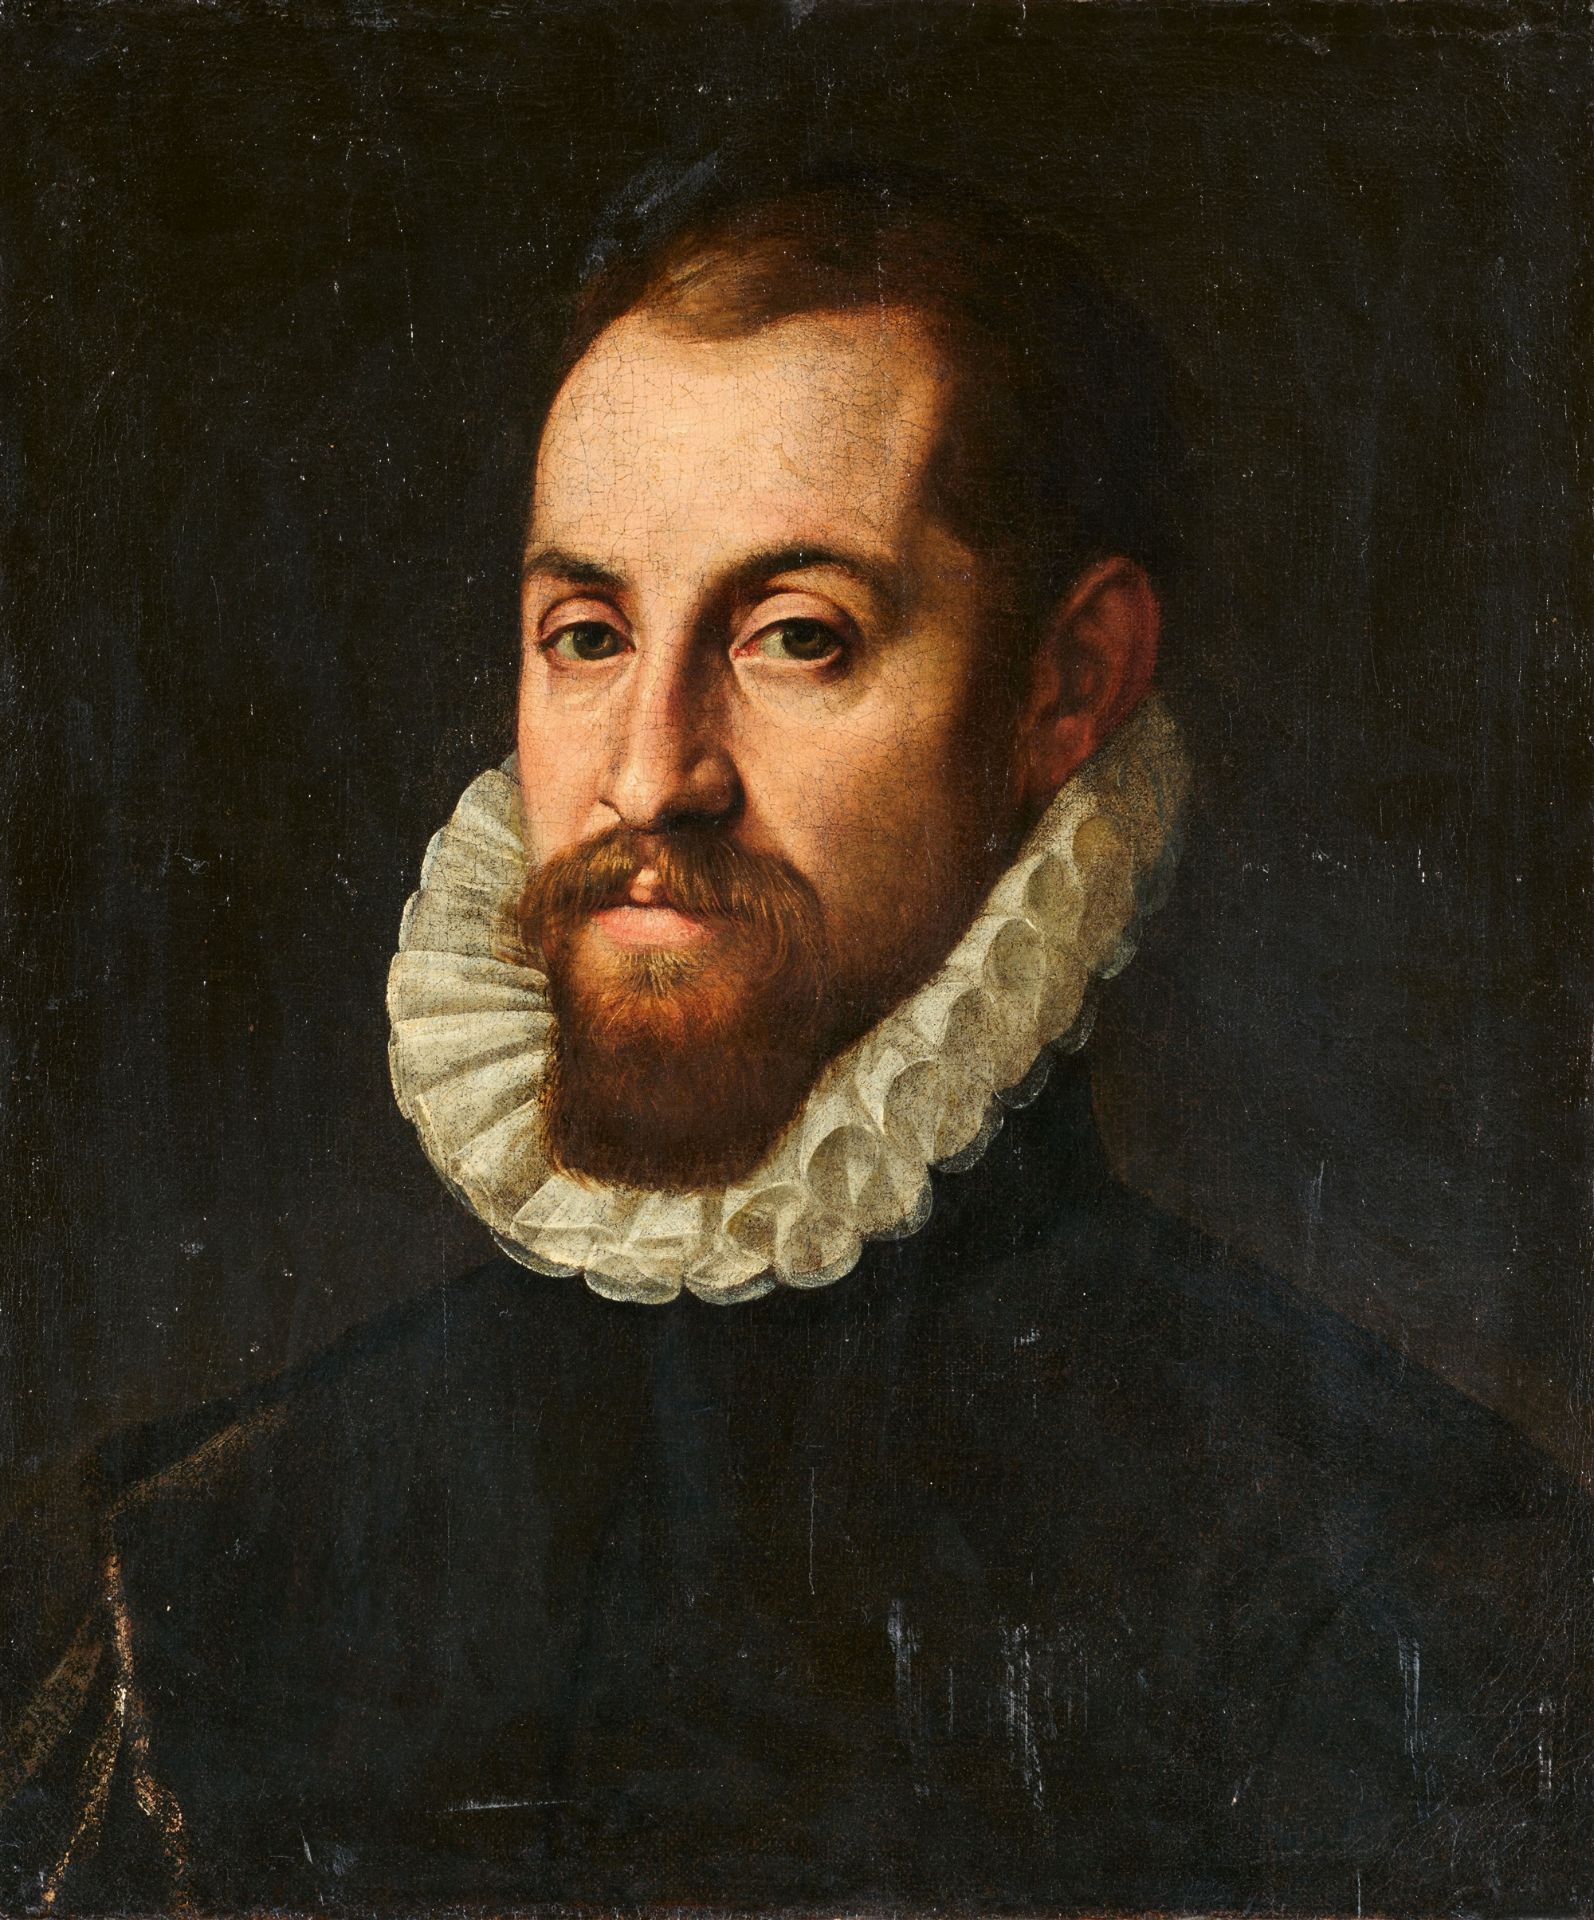 Italian School around 1600, Portrait of a Man in a White Ruff